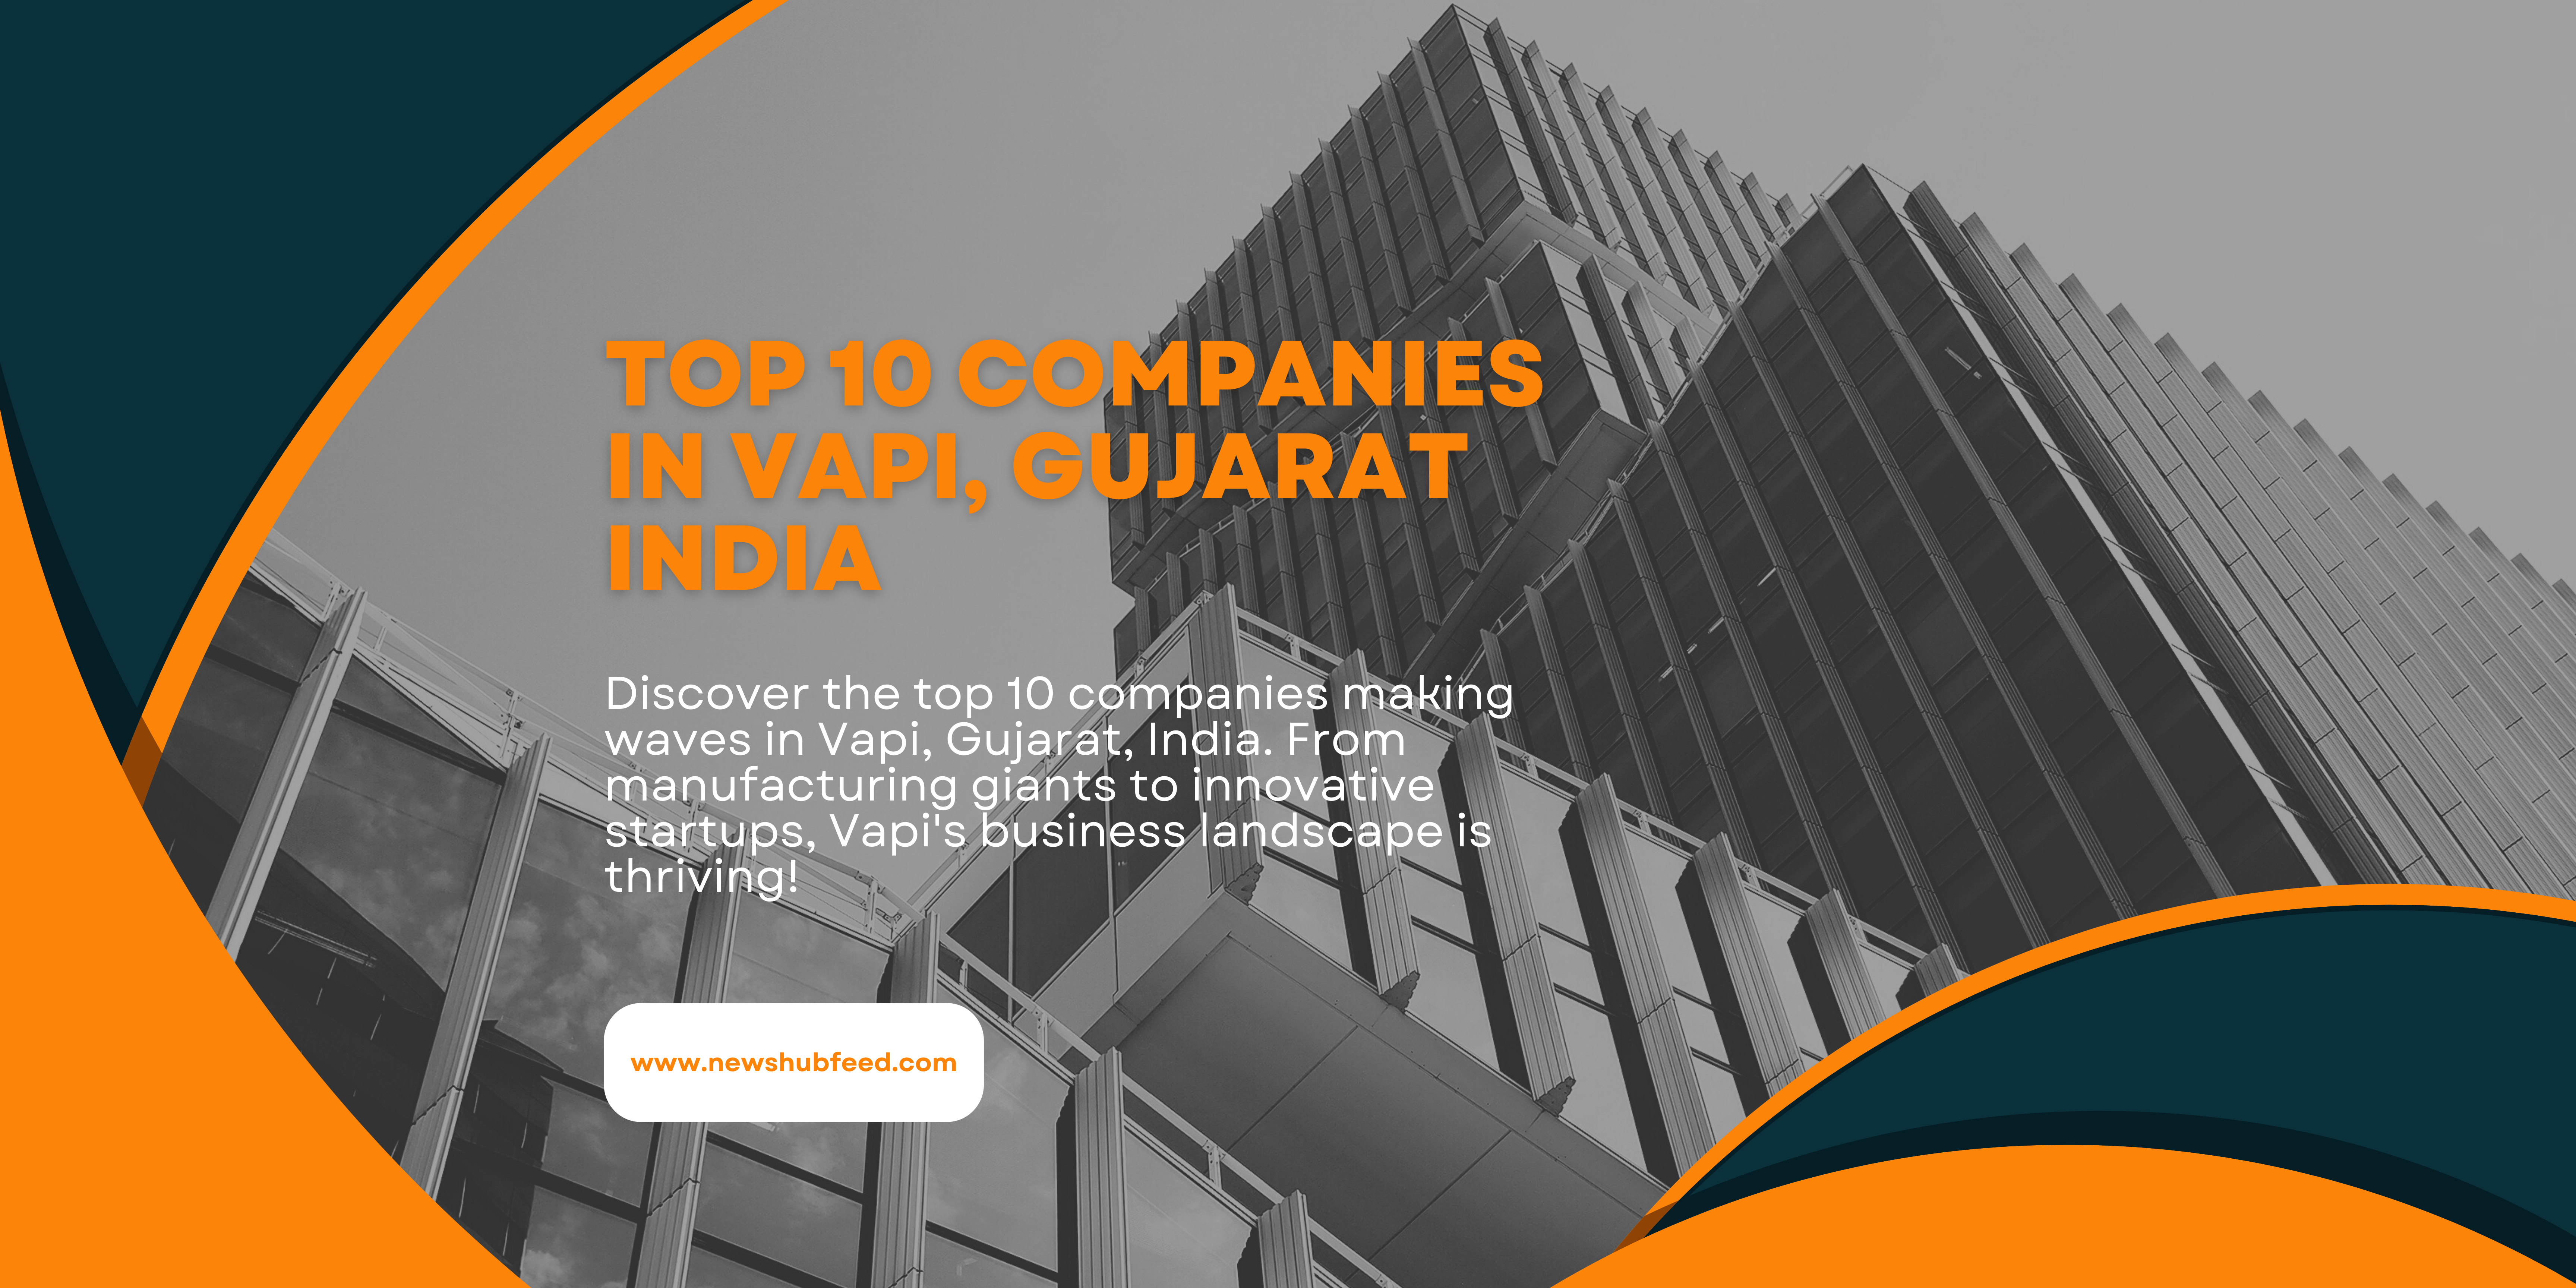 Top 10 Companies in Vapi